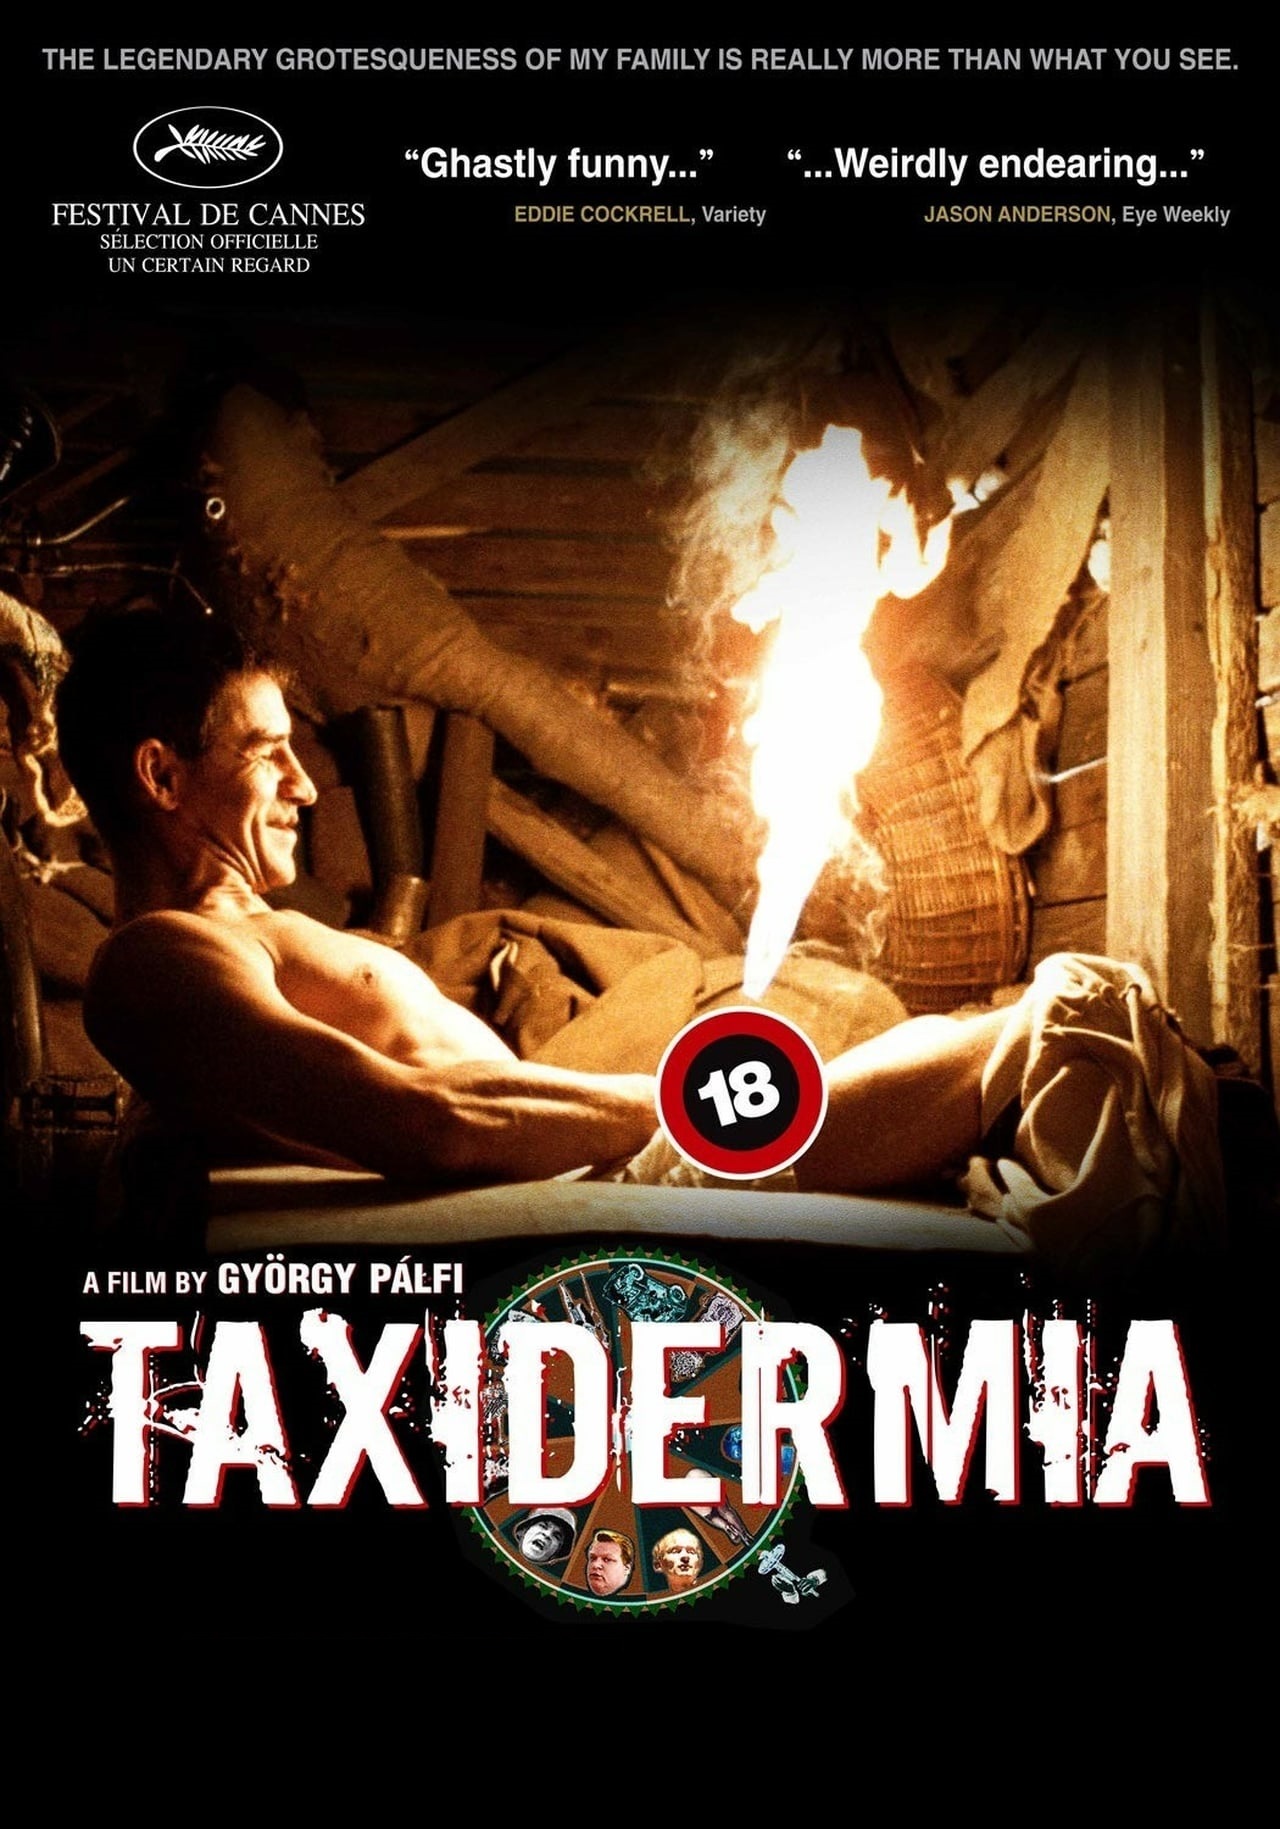 Taxidermia [Sub-ITA] (2006)